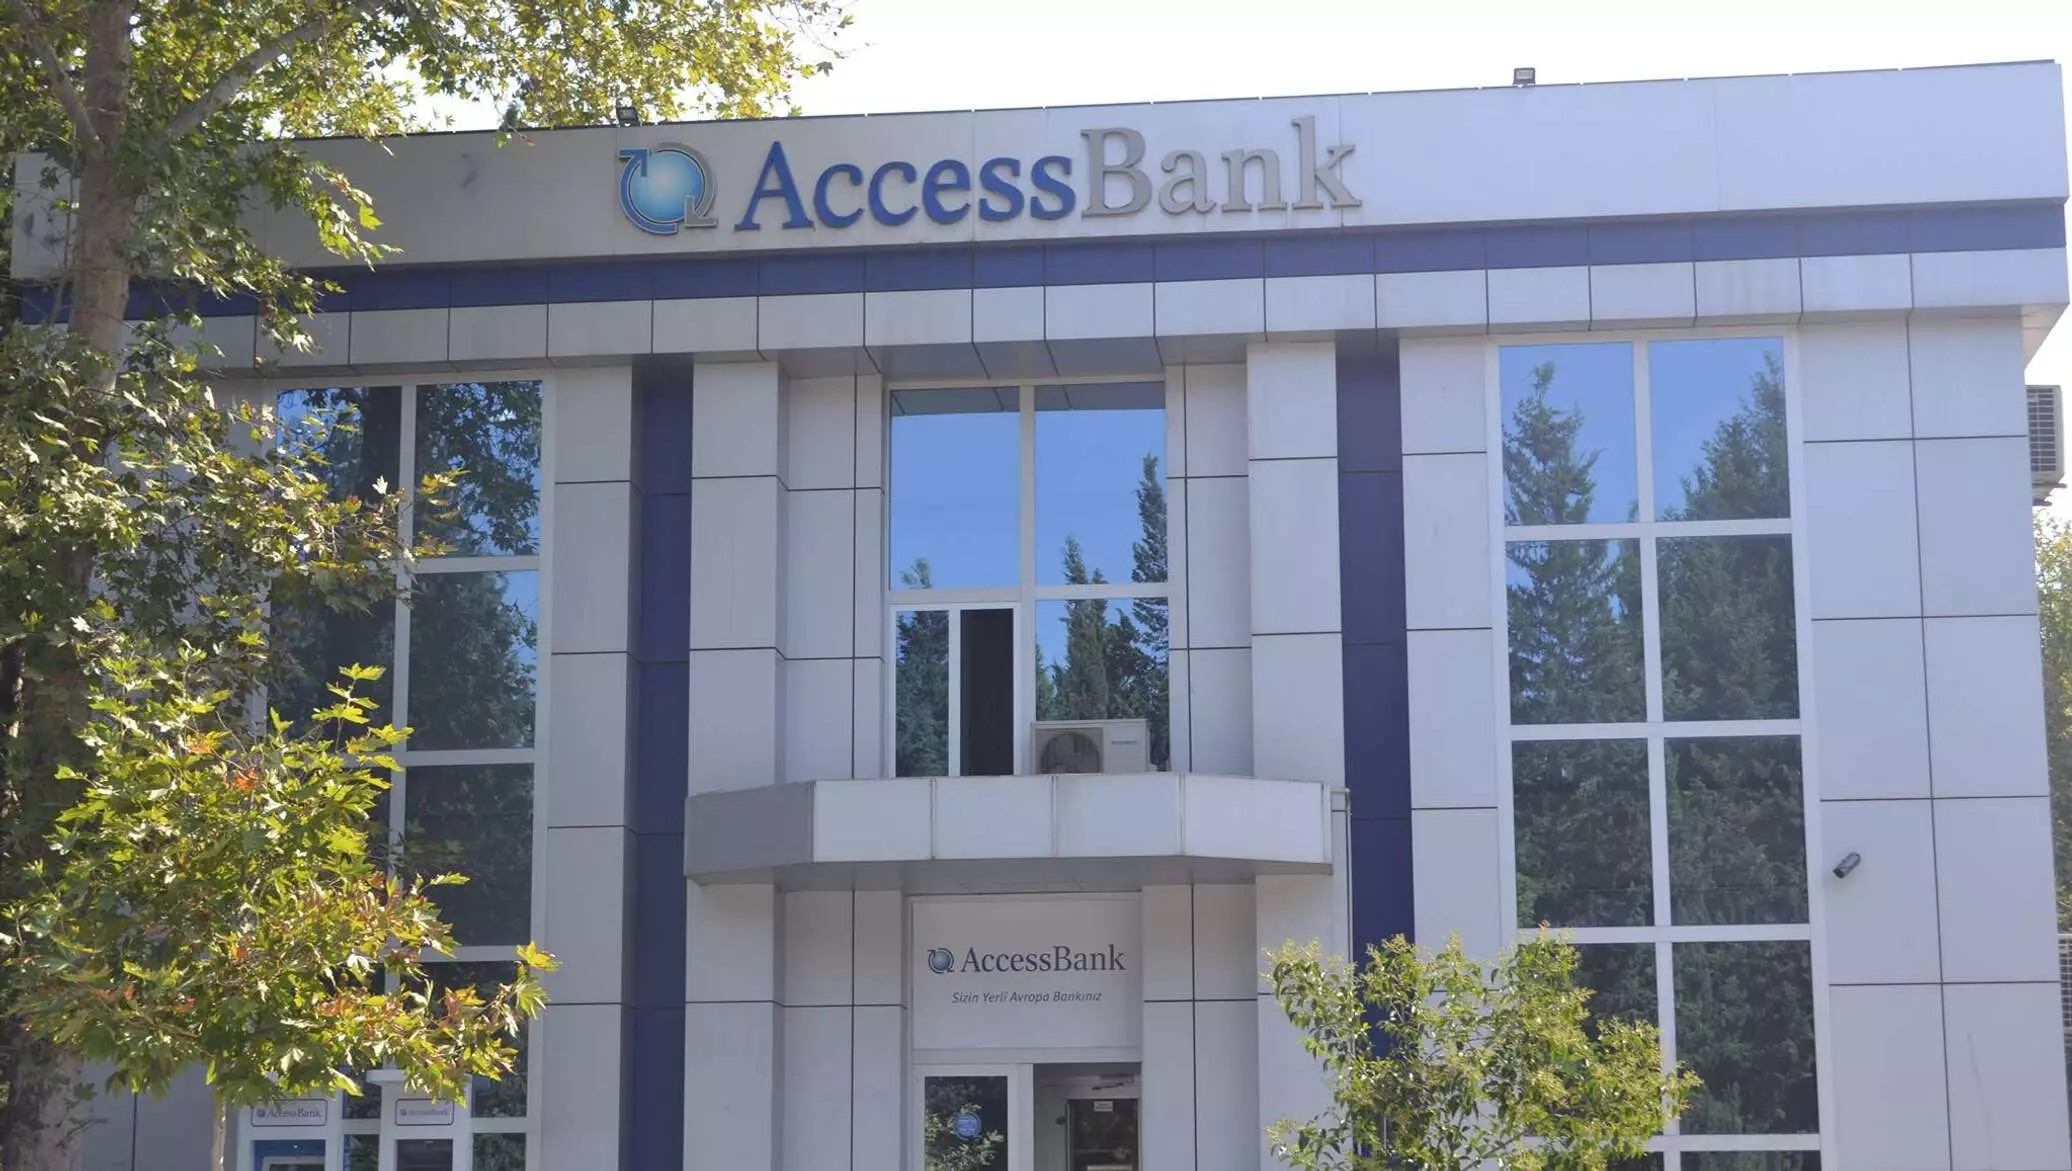 Access Bank VAKANSİYA elan edir